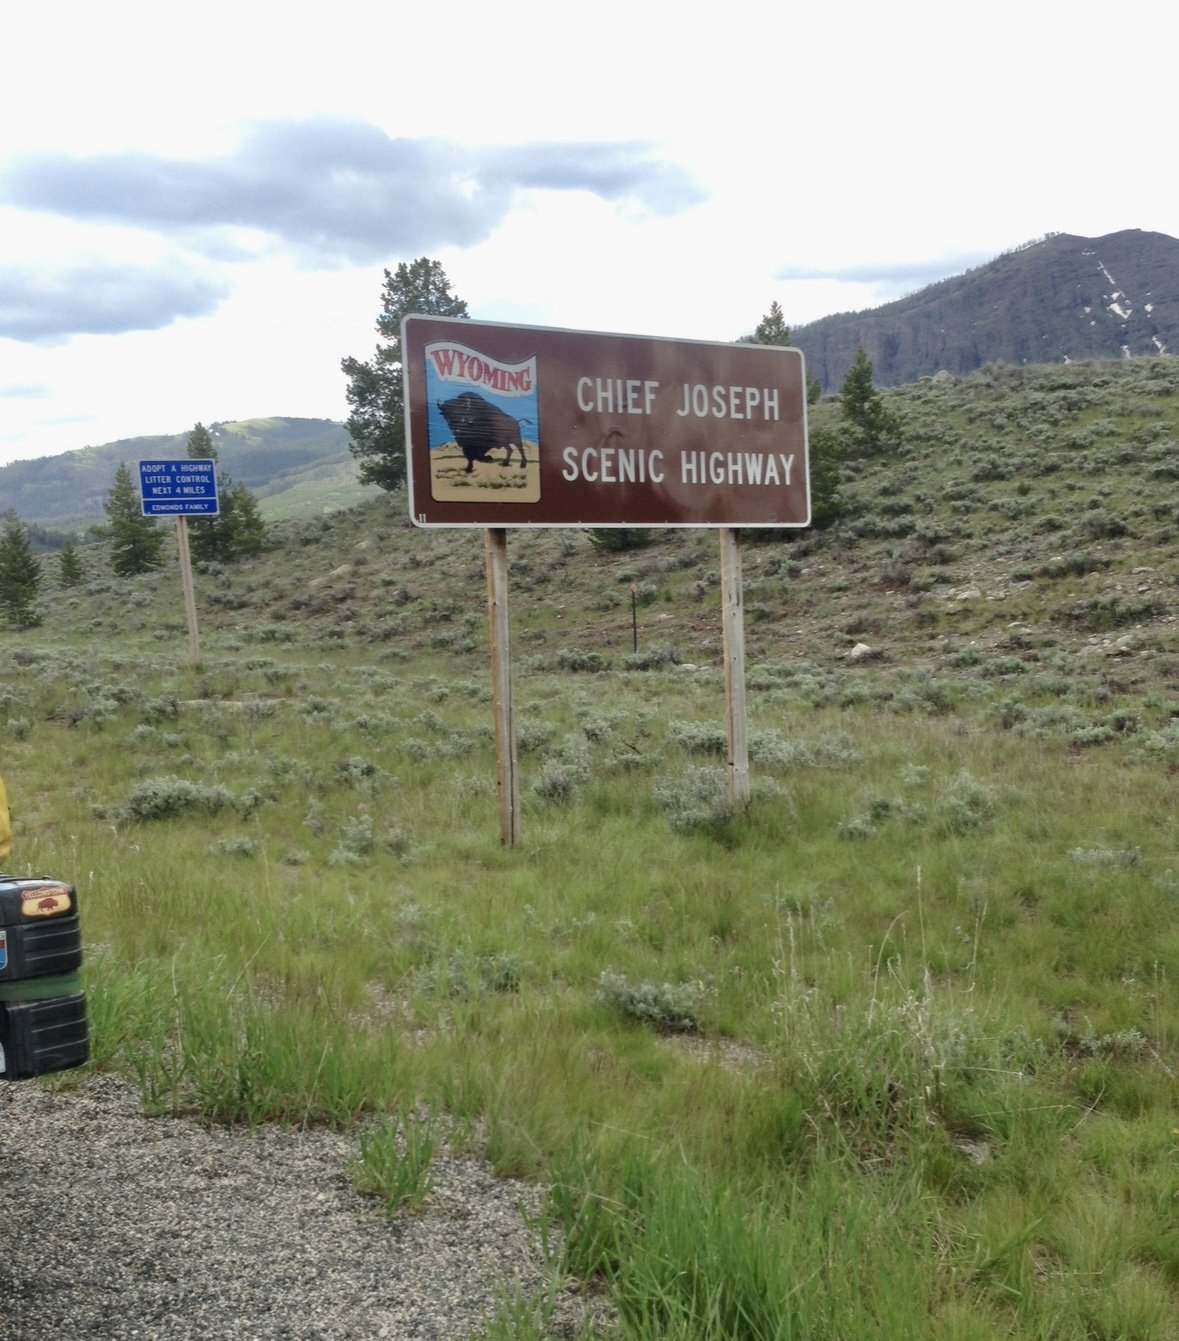  Between Cooke City, Montana and Cody, Wyoming 